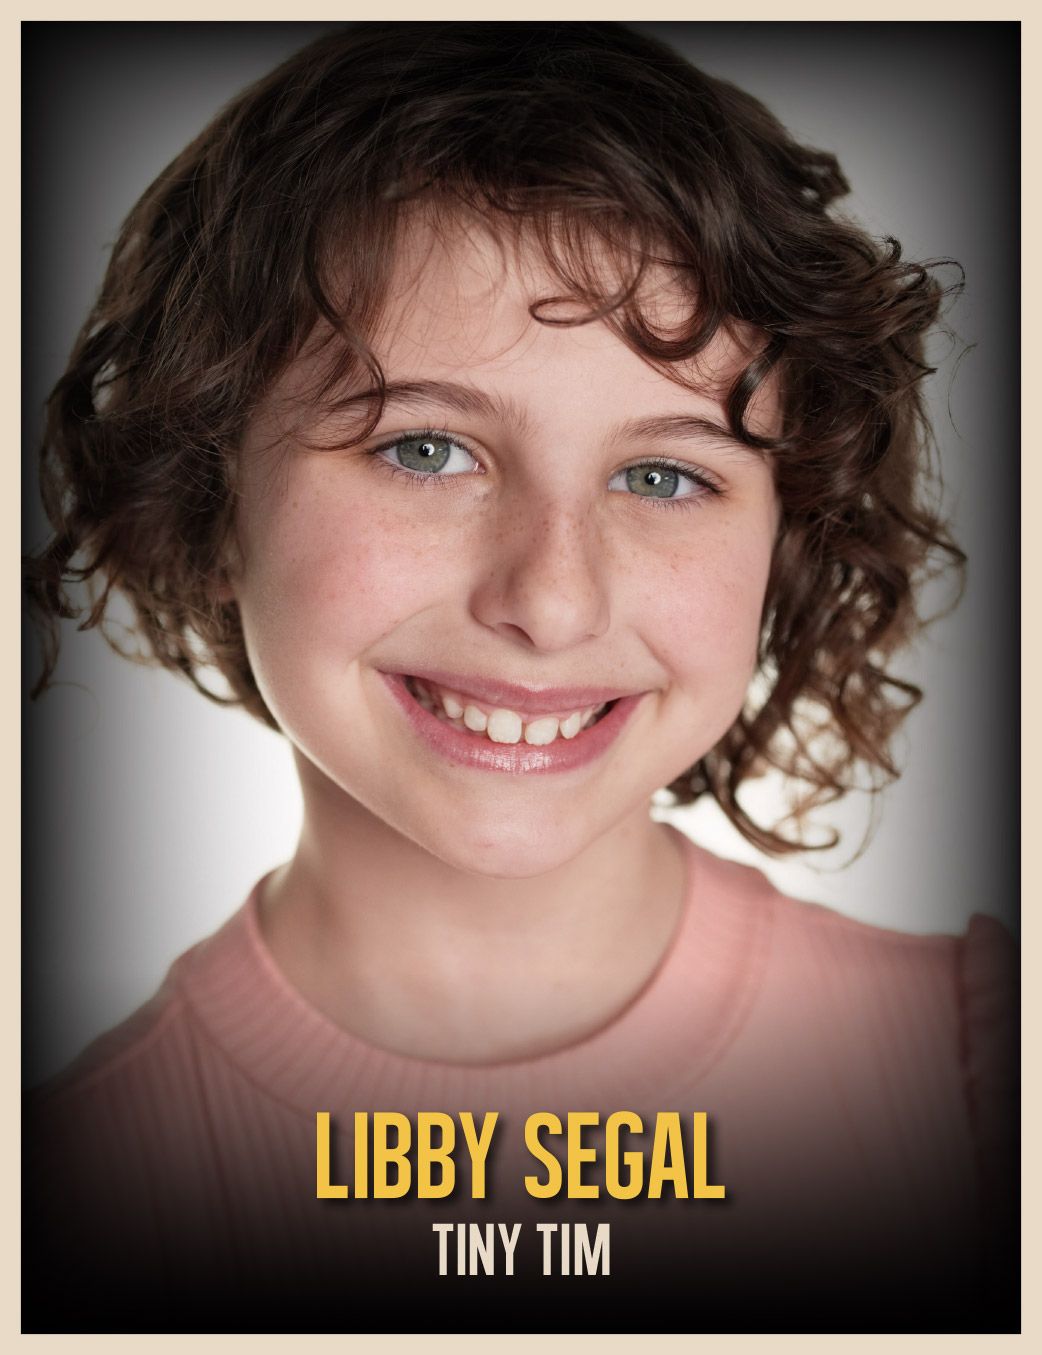 Libby Segal